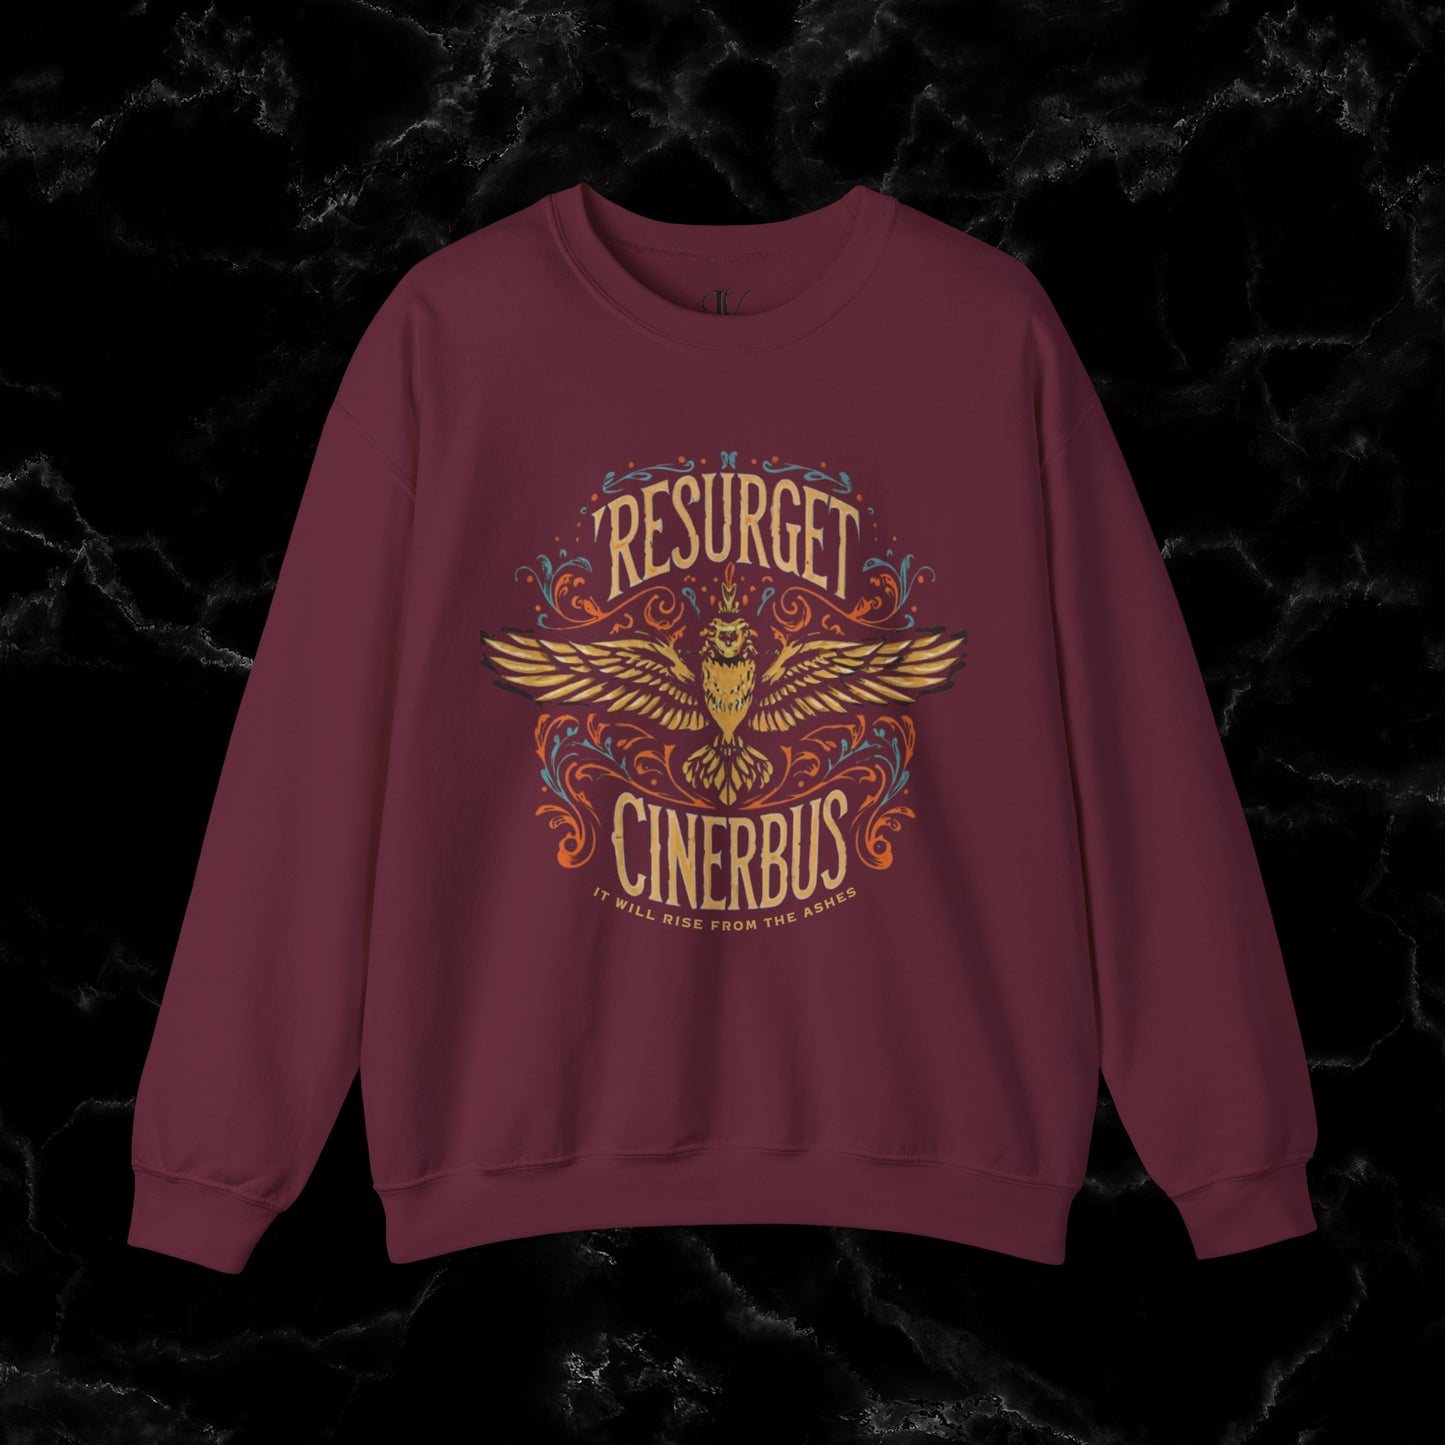 Resurget Cineribus Unisex Crewneck Sweatshirt - Latin Inspirational Gifts for Sports Football Fans Sweatshirt S Maroon 